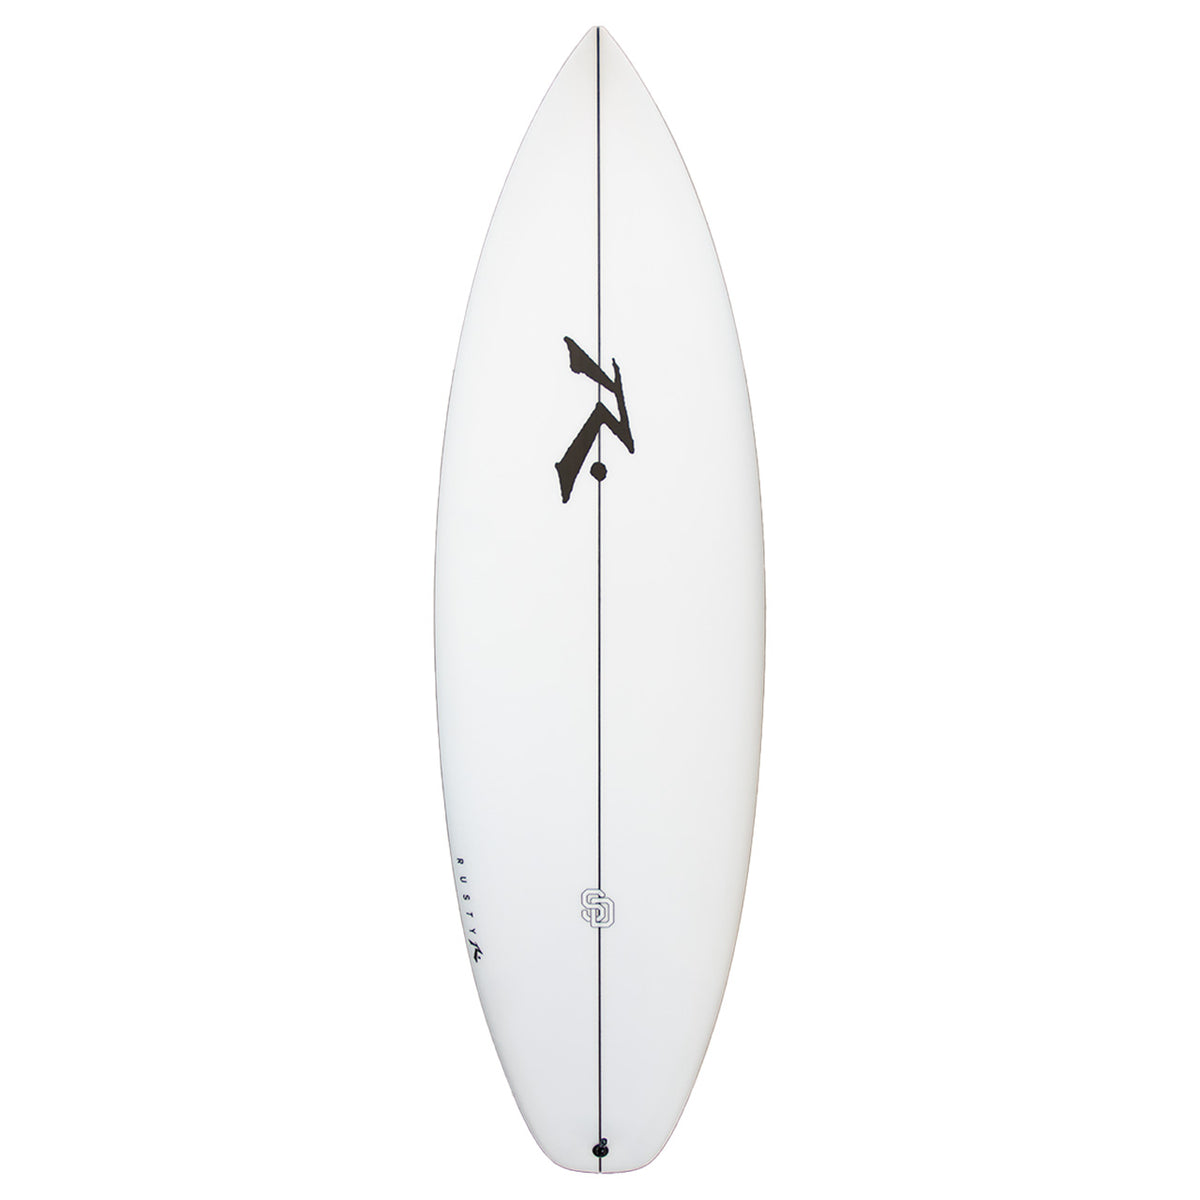 SD | Shop Rusty Surfboards